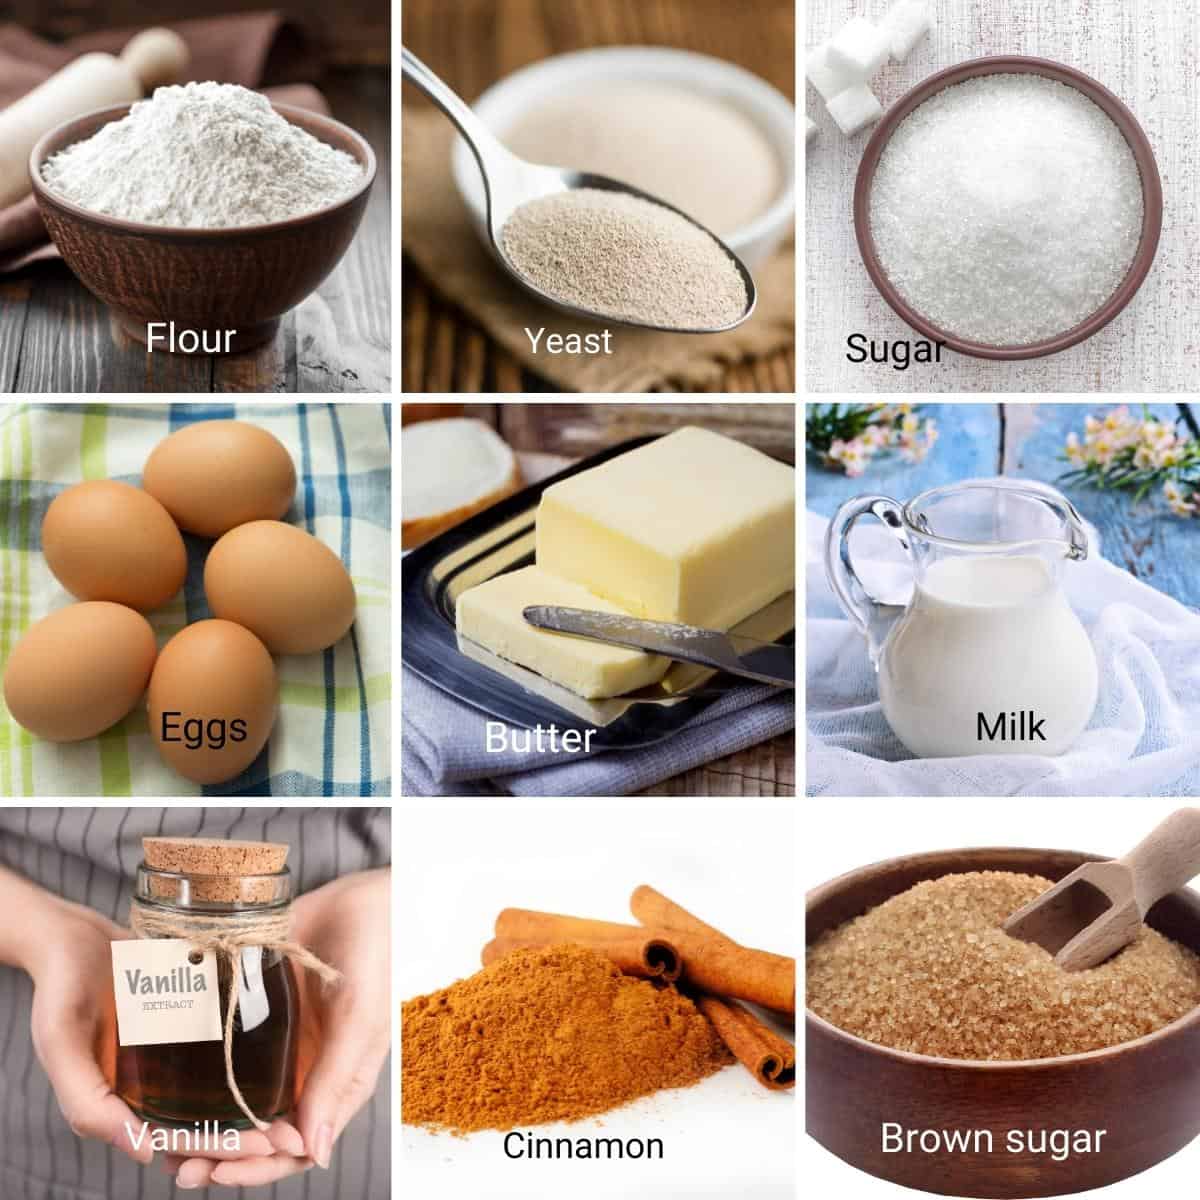 Ingredients for making Cinnamon Buns.